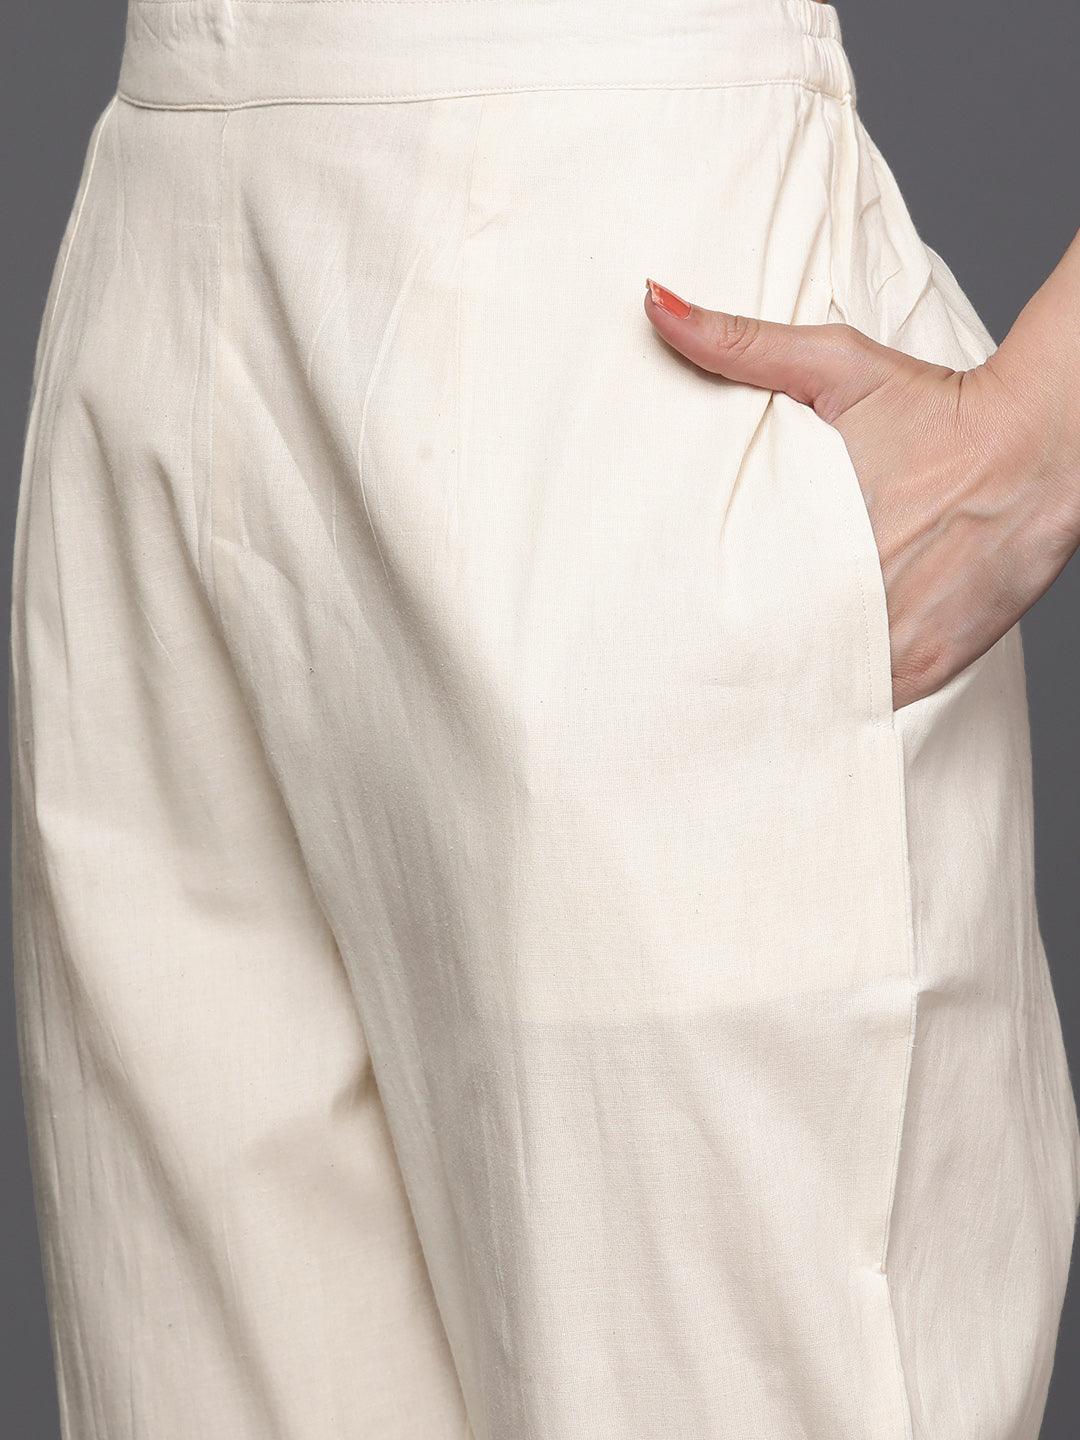 Off White Printed Cotton Suit Set - Libas